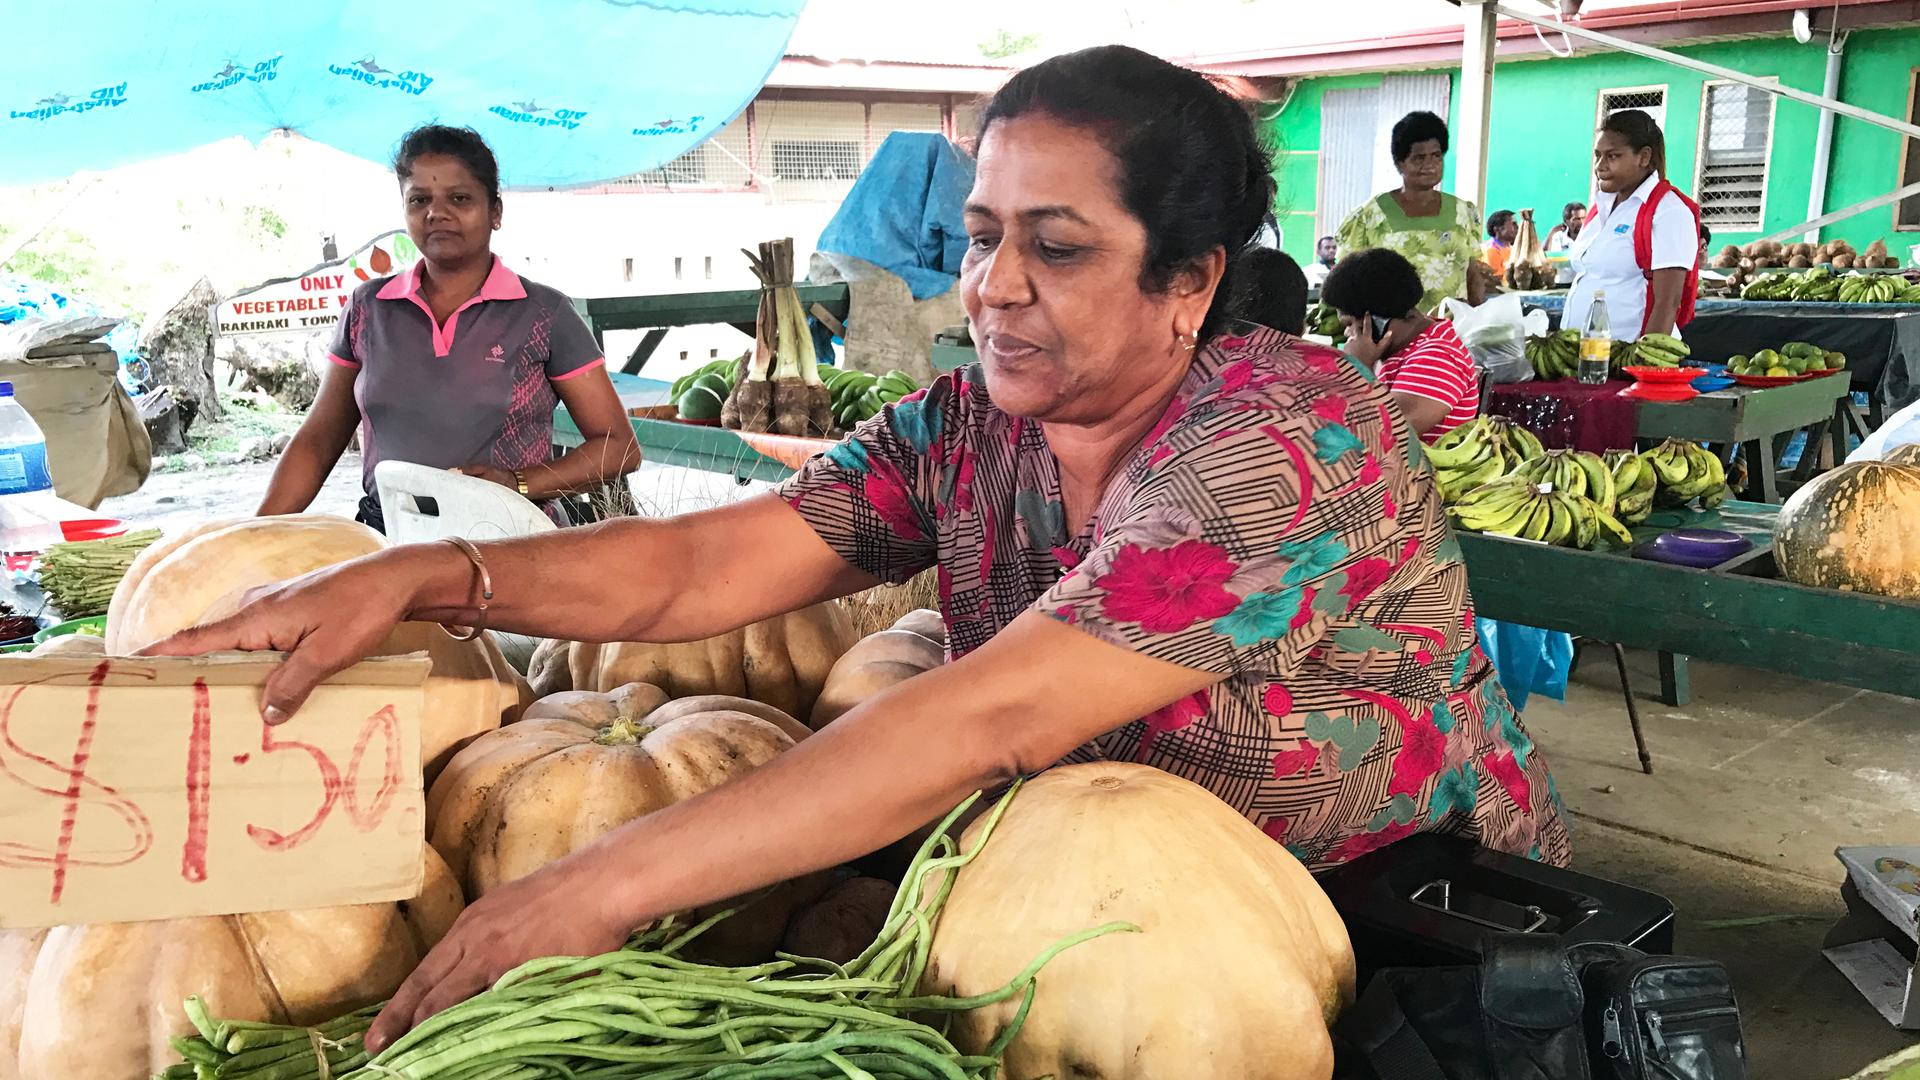 Sunila Wati at her vegetable stall in the market in Rakiraki, Fiji